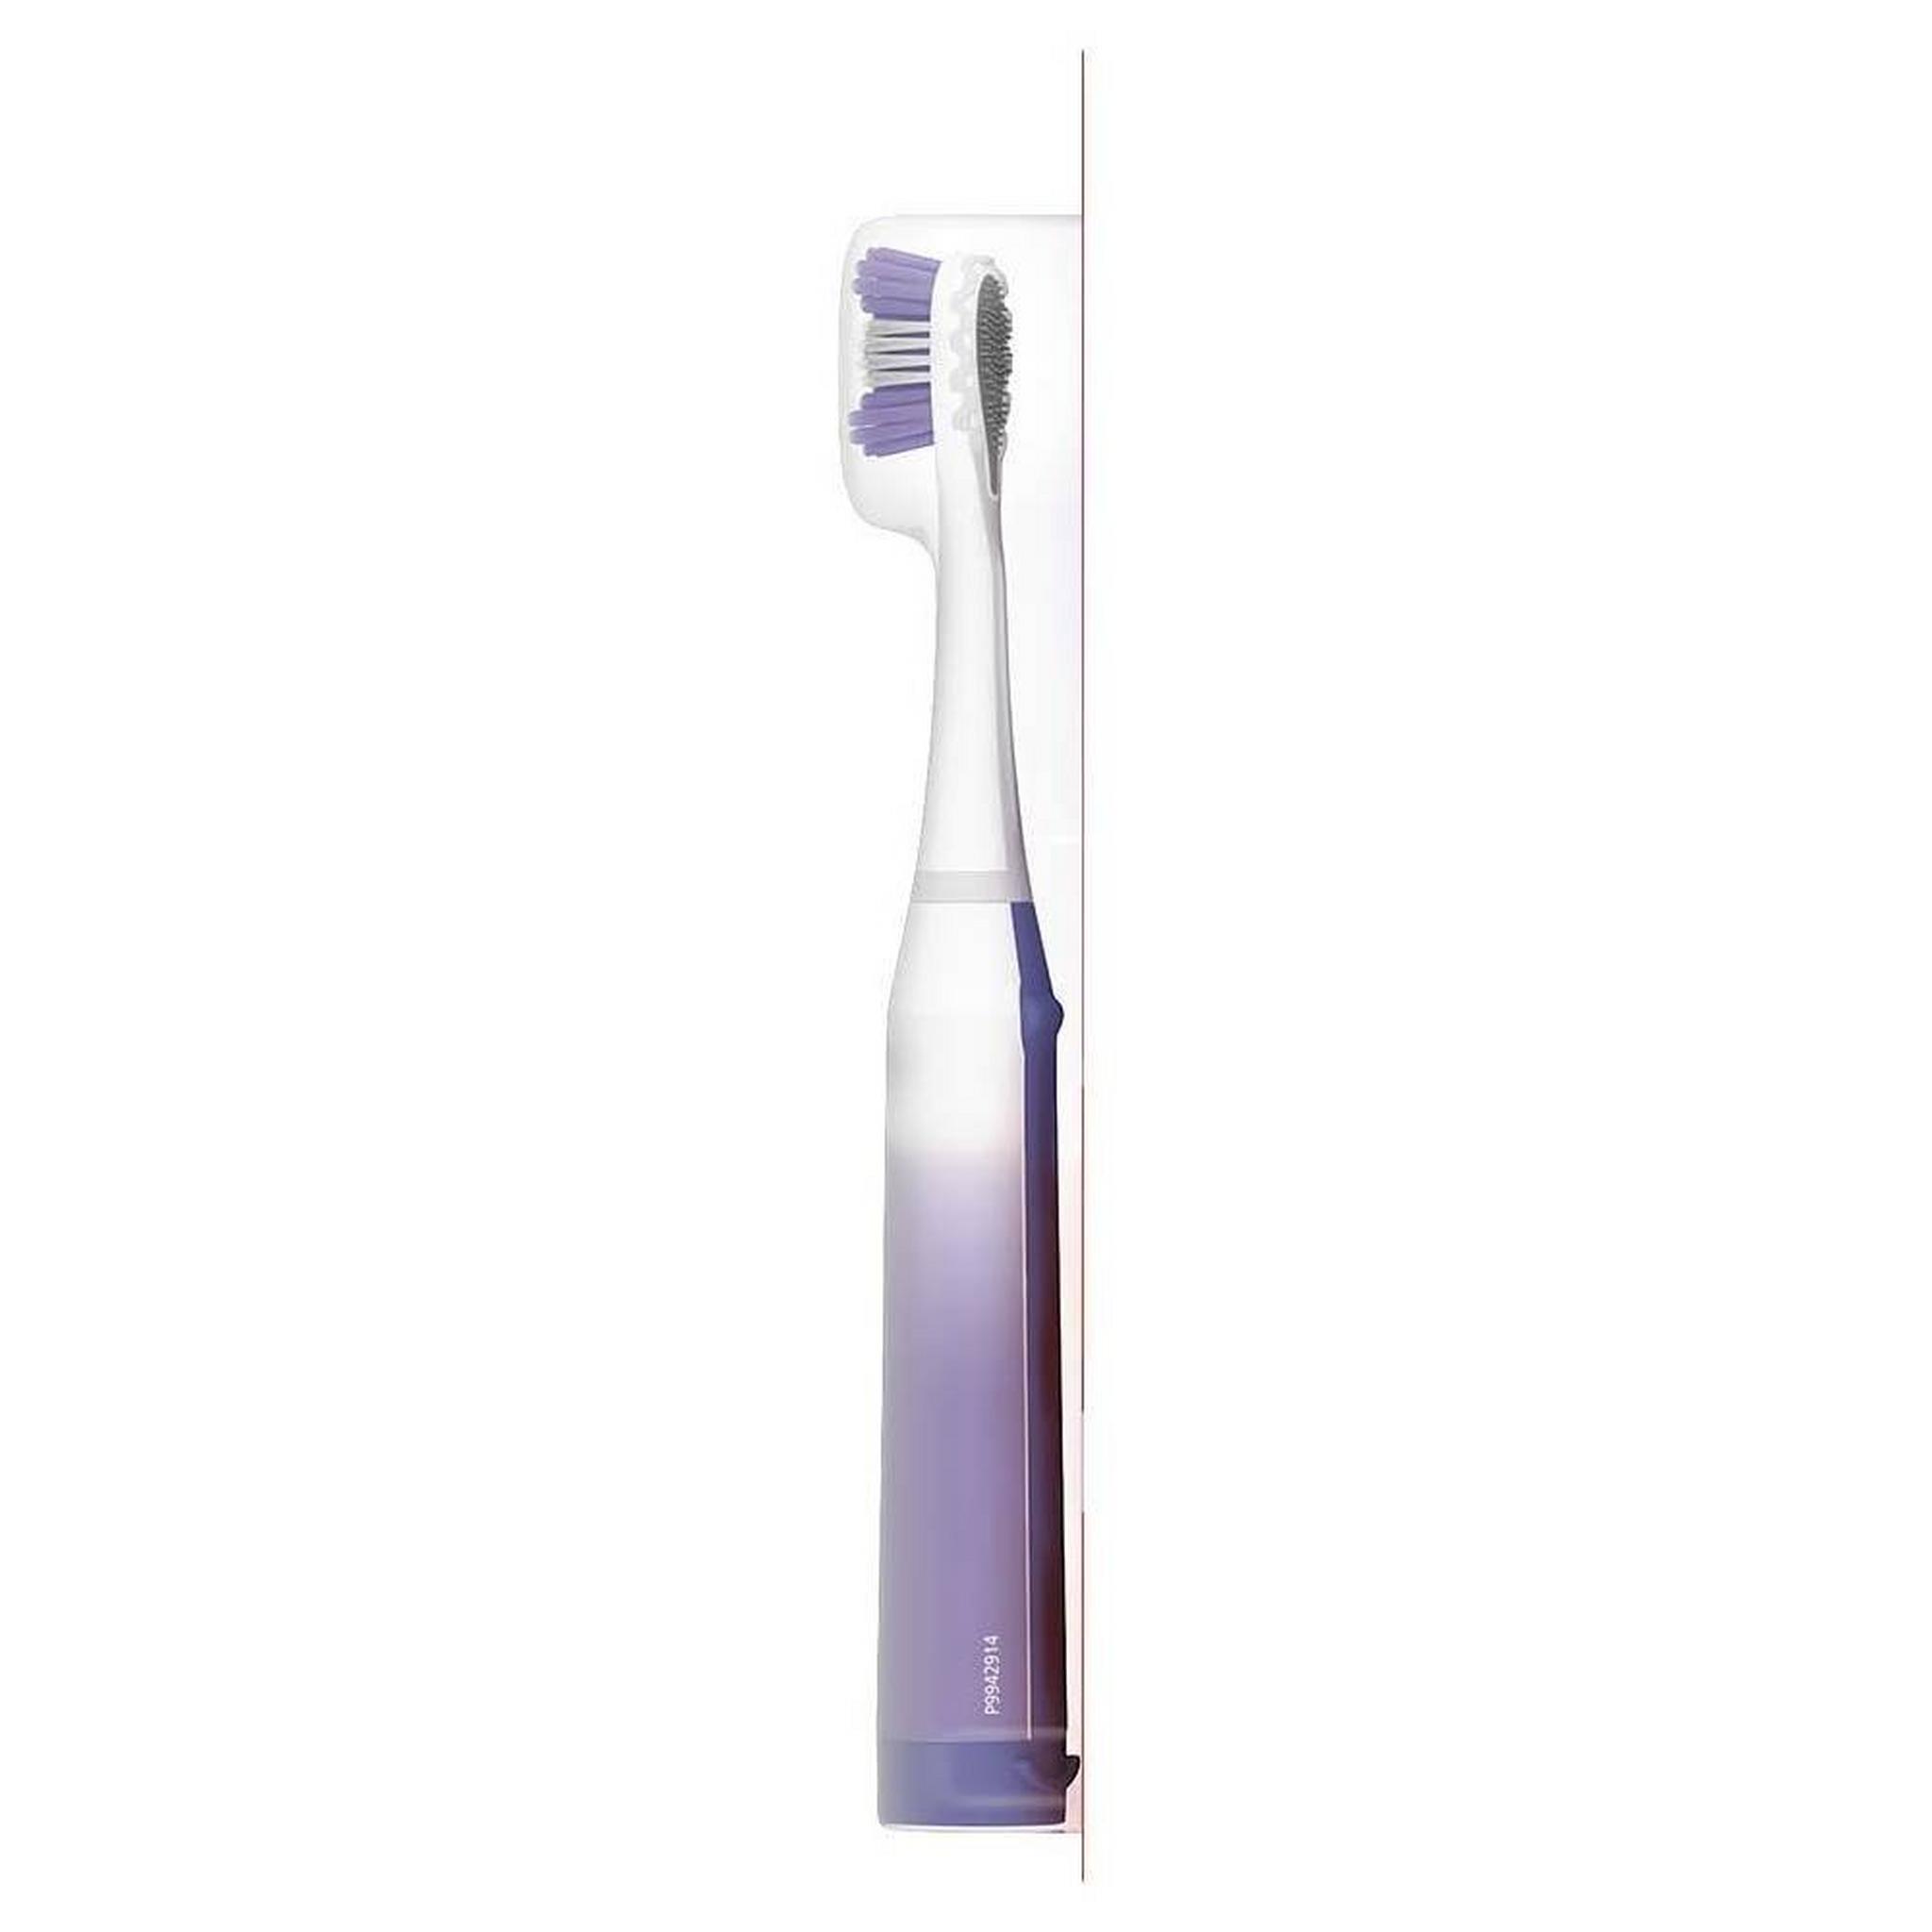 Colgate 360 Gum Health Battery Toothbrush